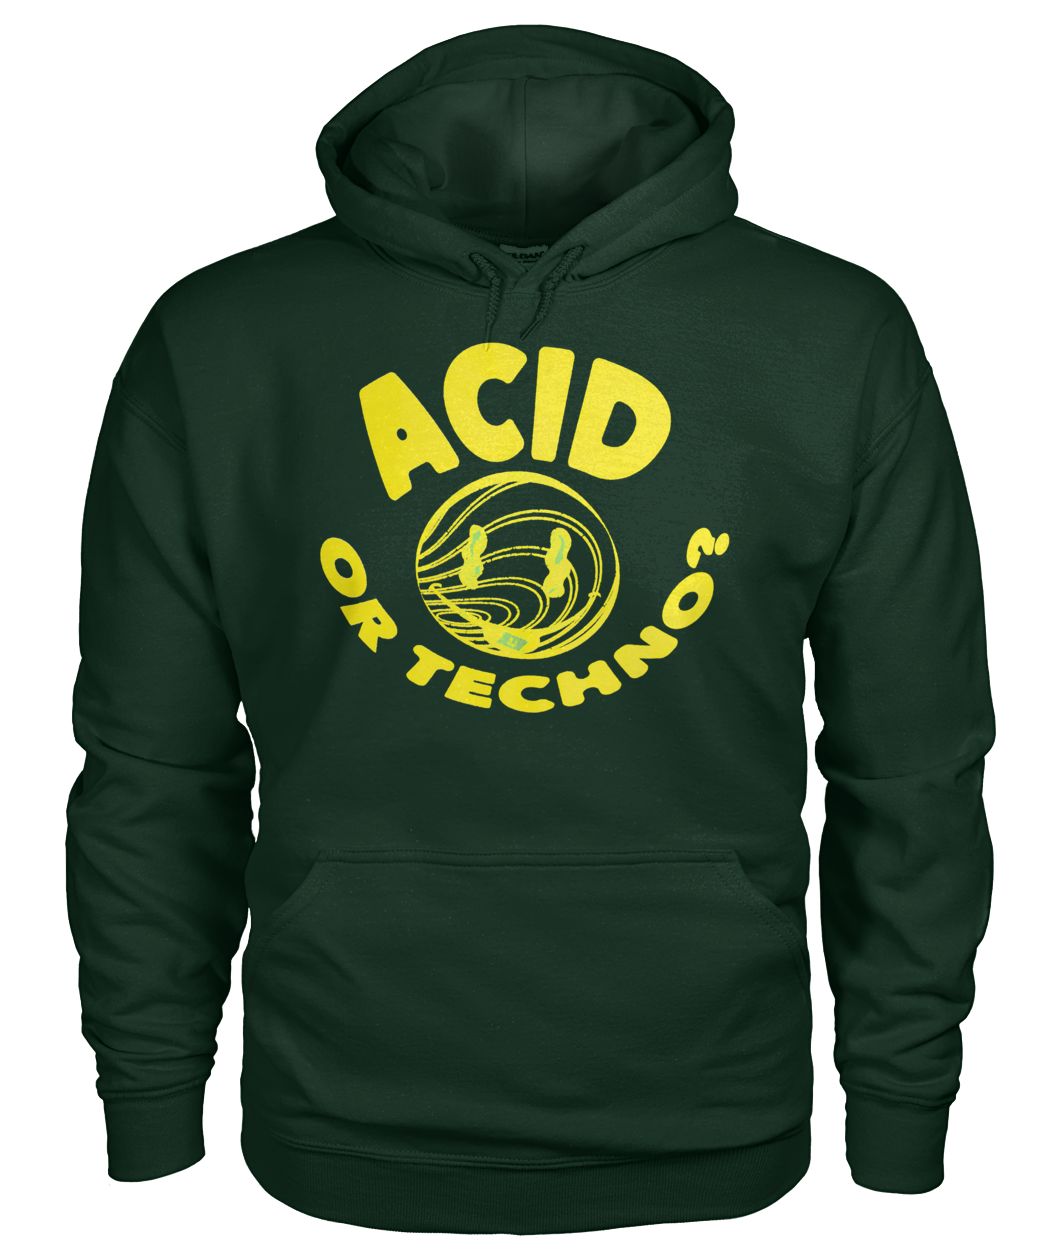 Jauz acid or techno gildan hoodie